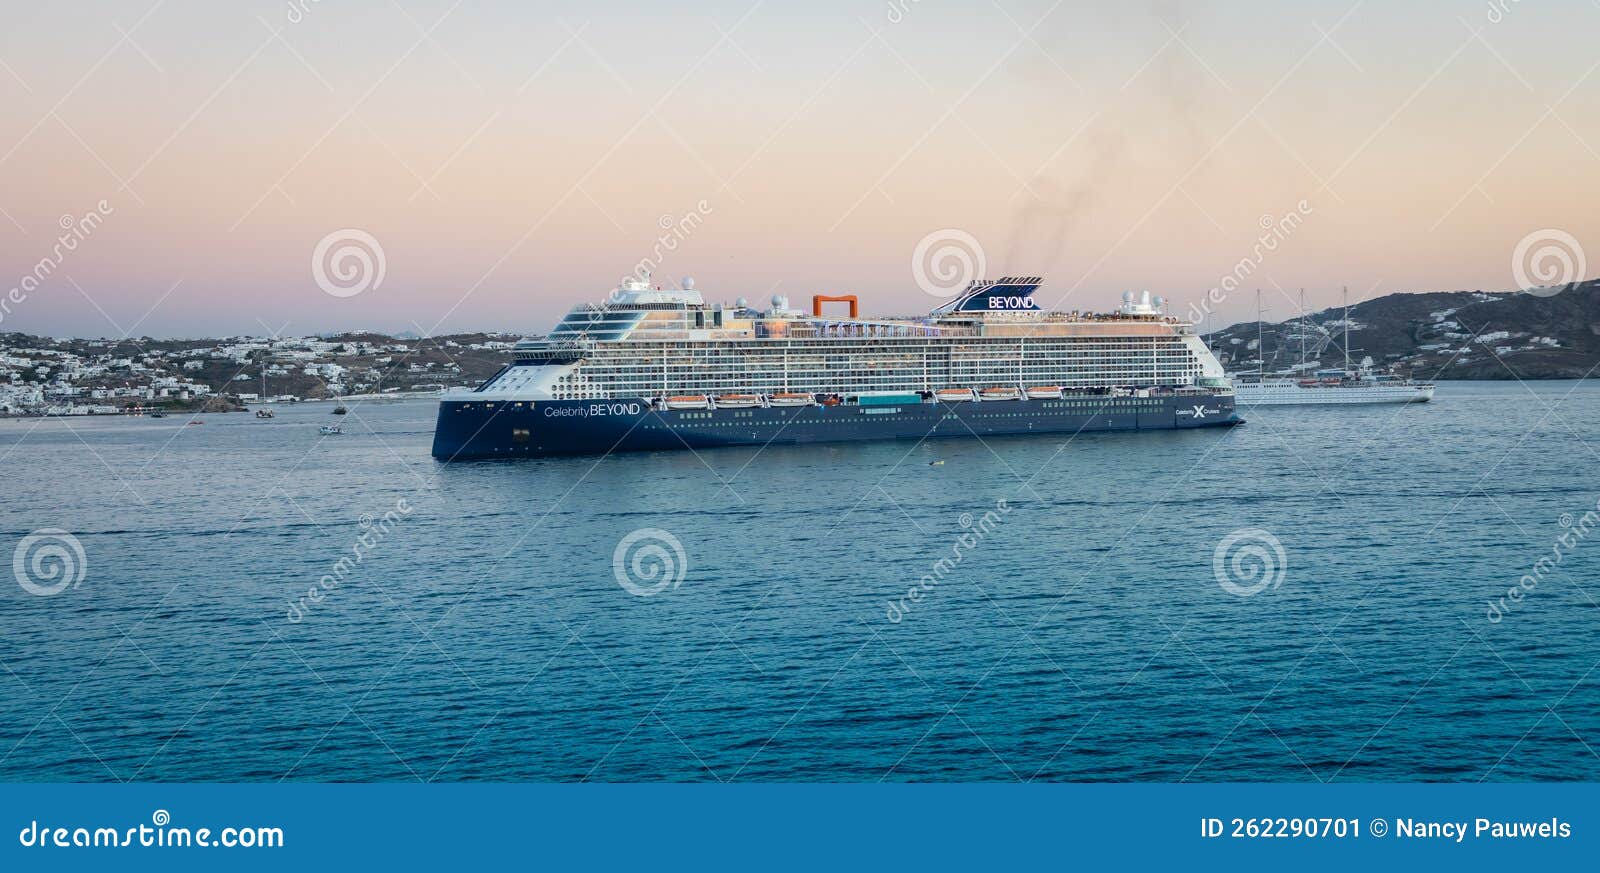 celebrity cruises in mykonos